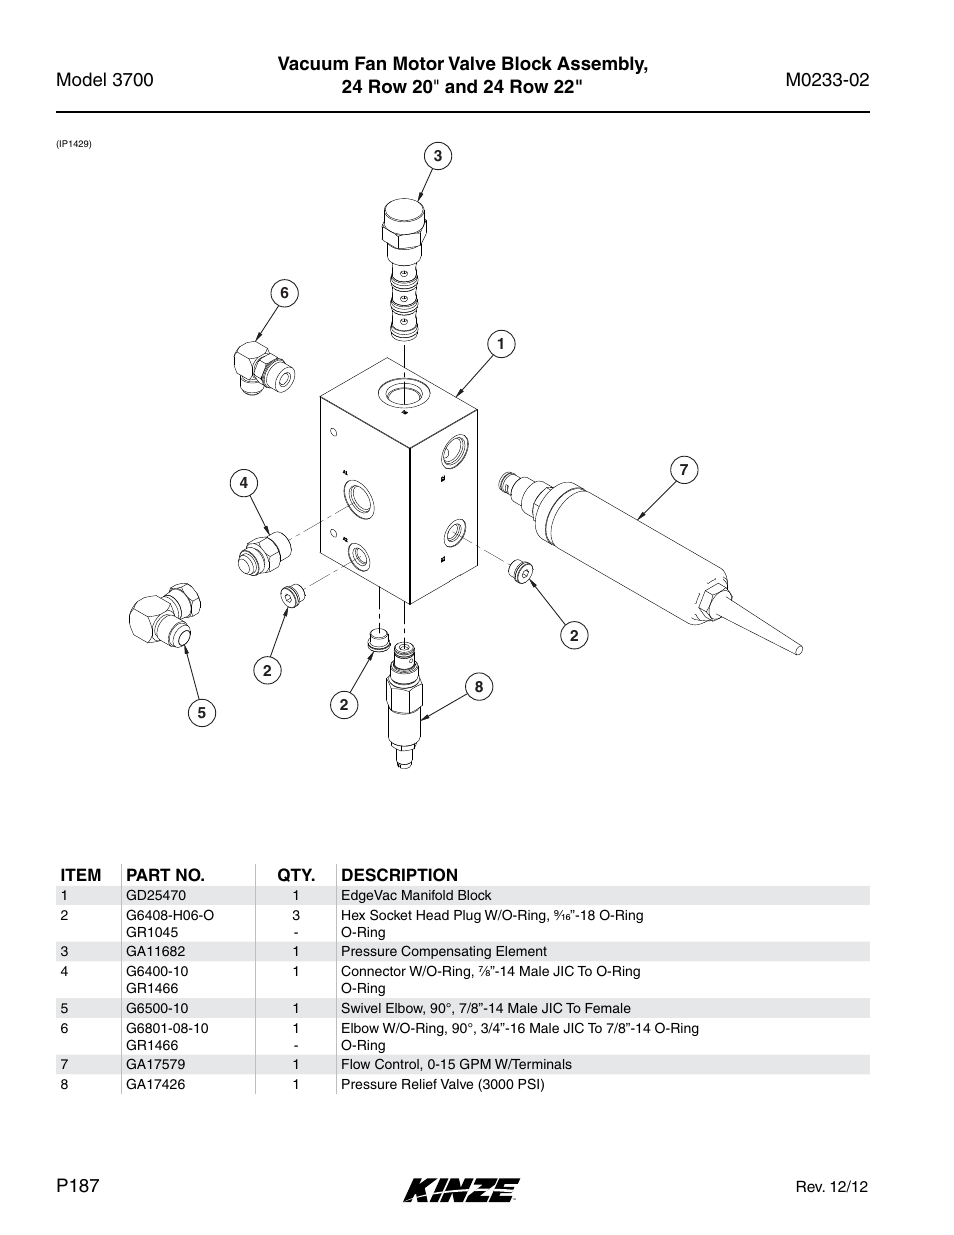 Vacuum fan motor valve block assembly | Kinze 3700 Front Folding Planter Rev. 6/14 User Manual | Page 190 / 284